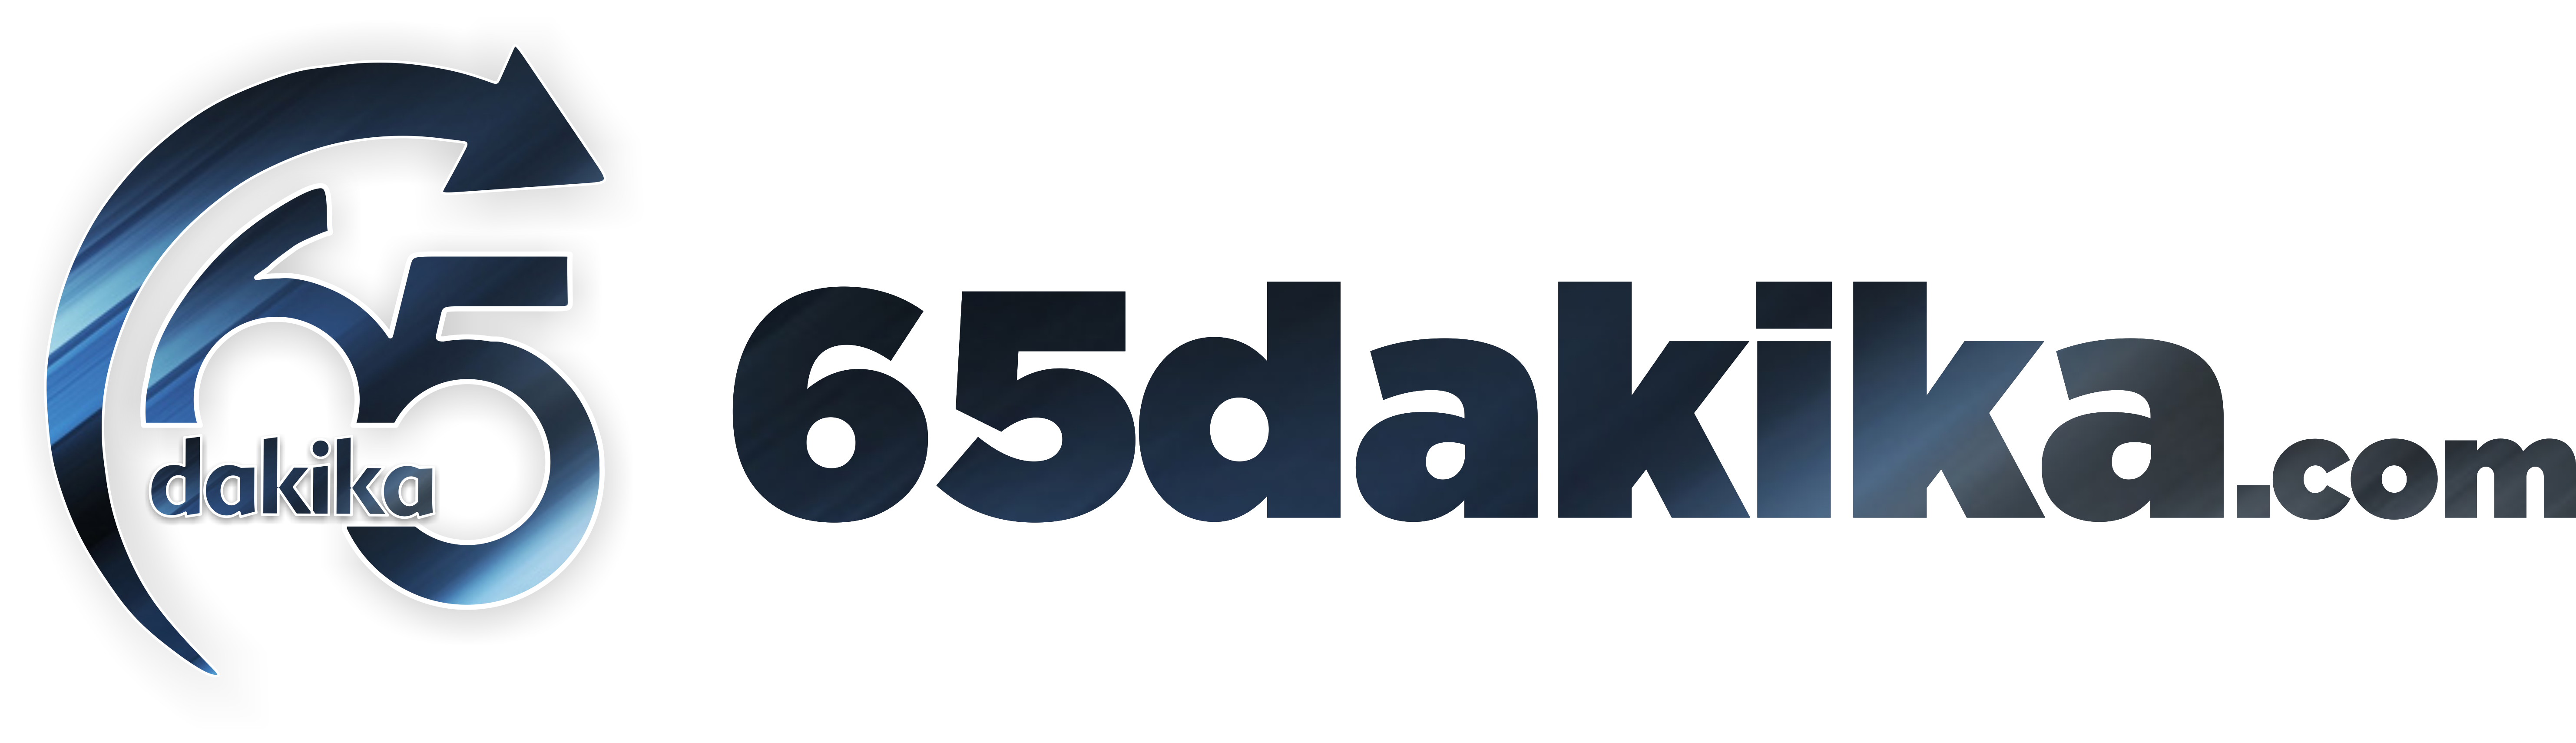 65 Dakika: Son Dakika Van Haber